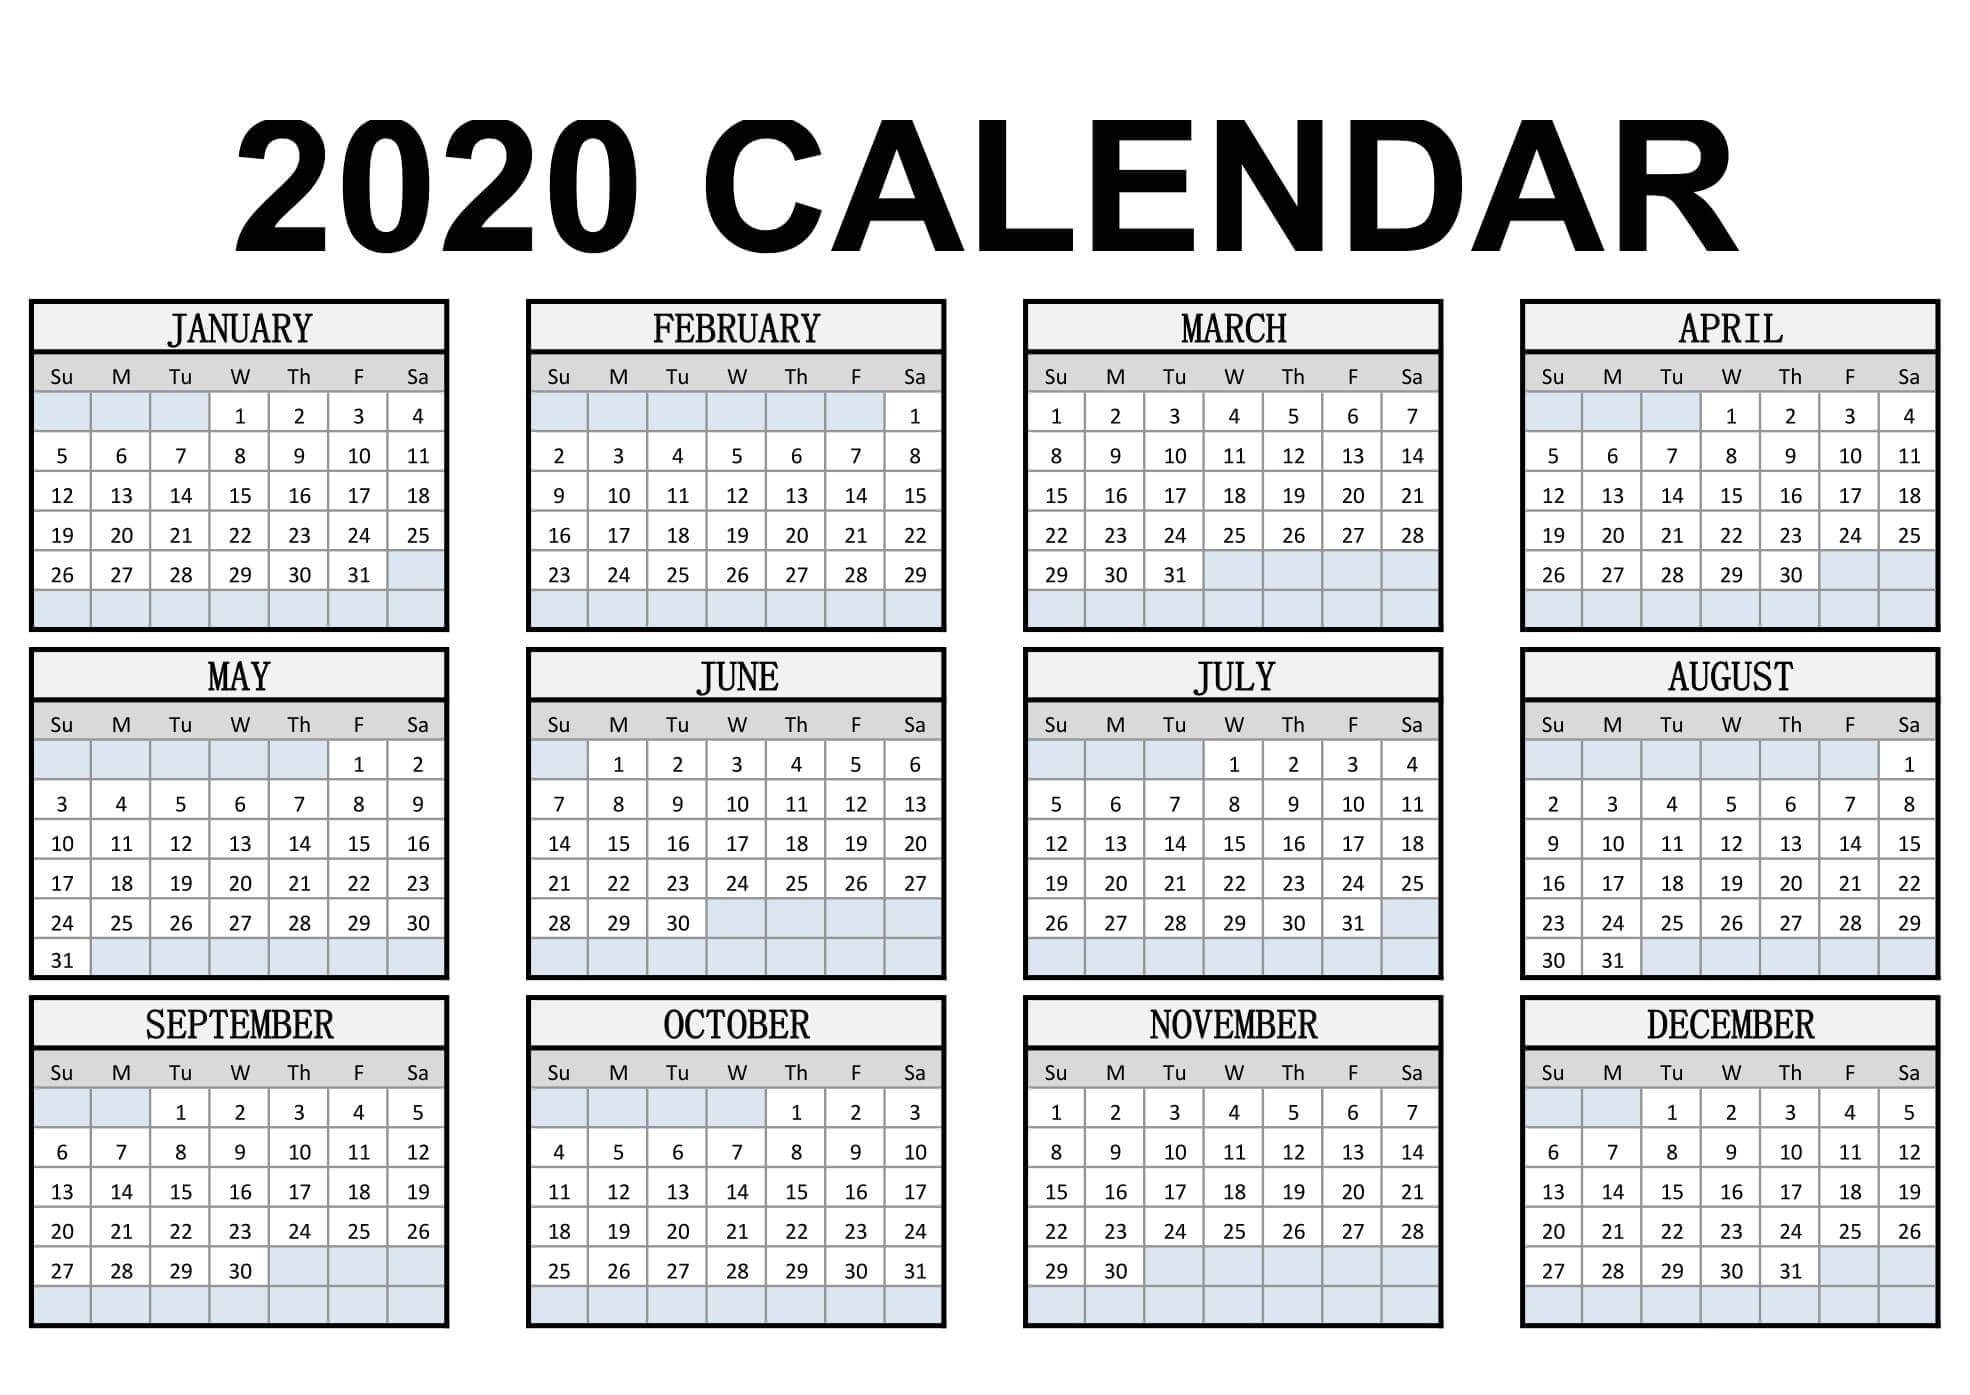 Calendar Year 2020 Holidays Template - 2019 Calendars For Perky 2020 All Year Calendar